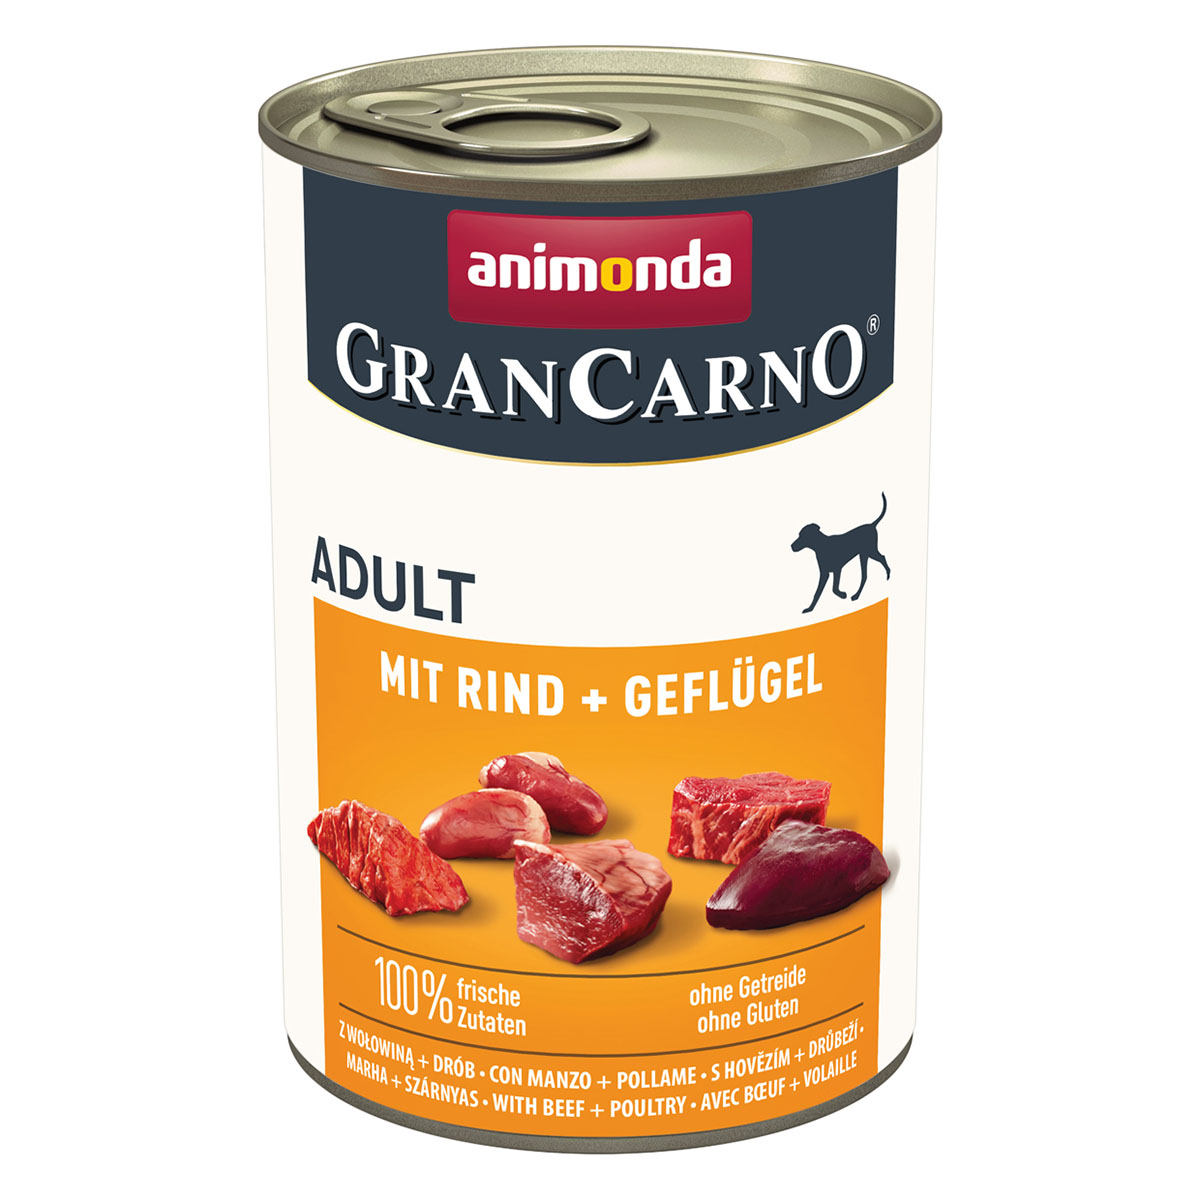 animonda GranCarno Adult mit Rind und Geflügel 6x400g von animonda GranCarno